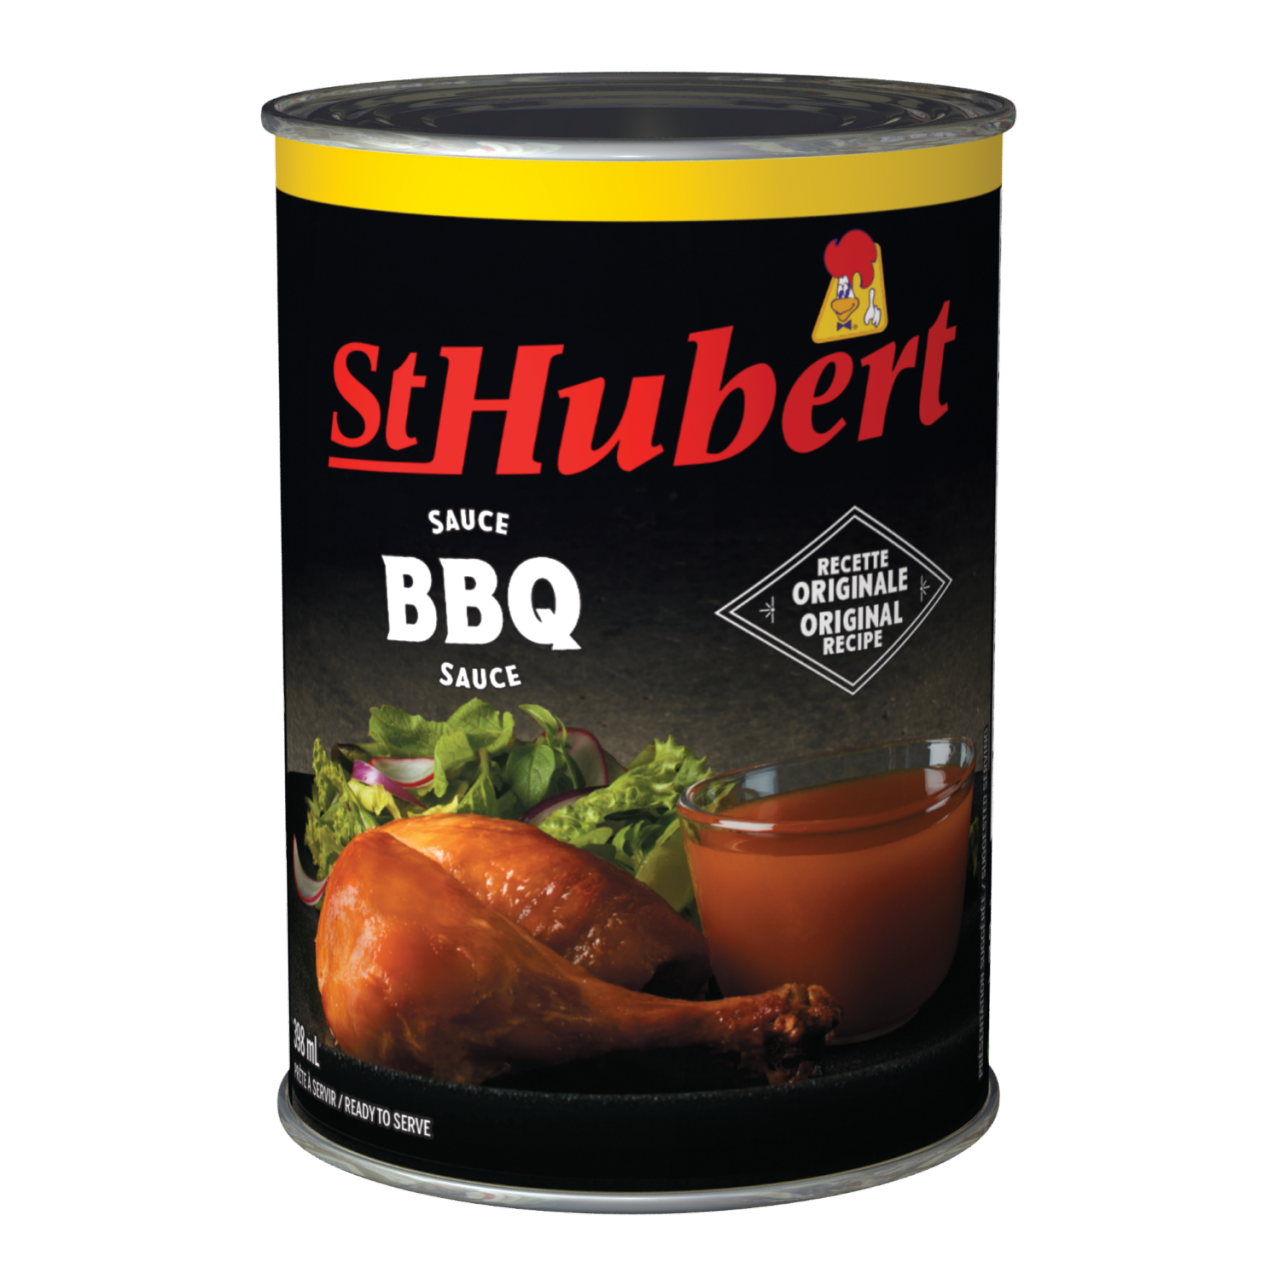 St-Hubert BBQ Sauce